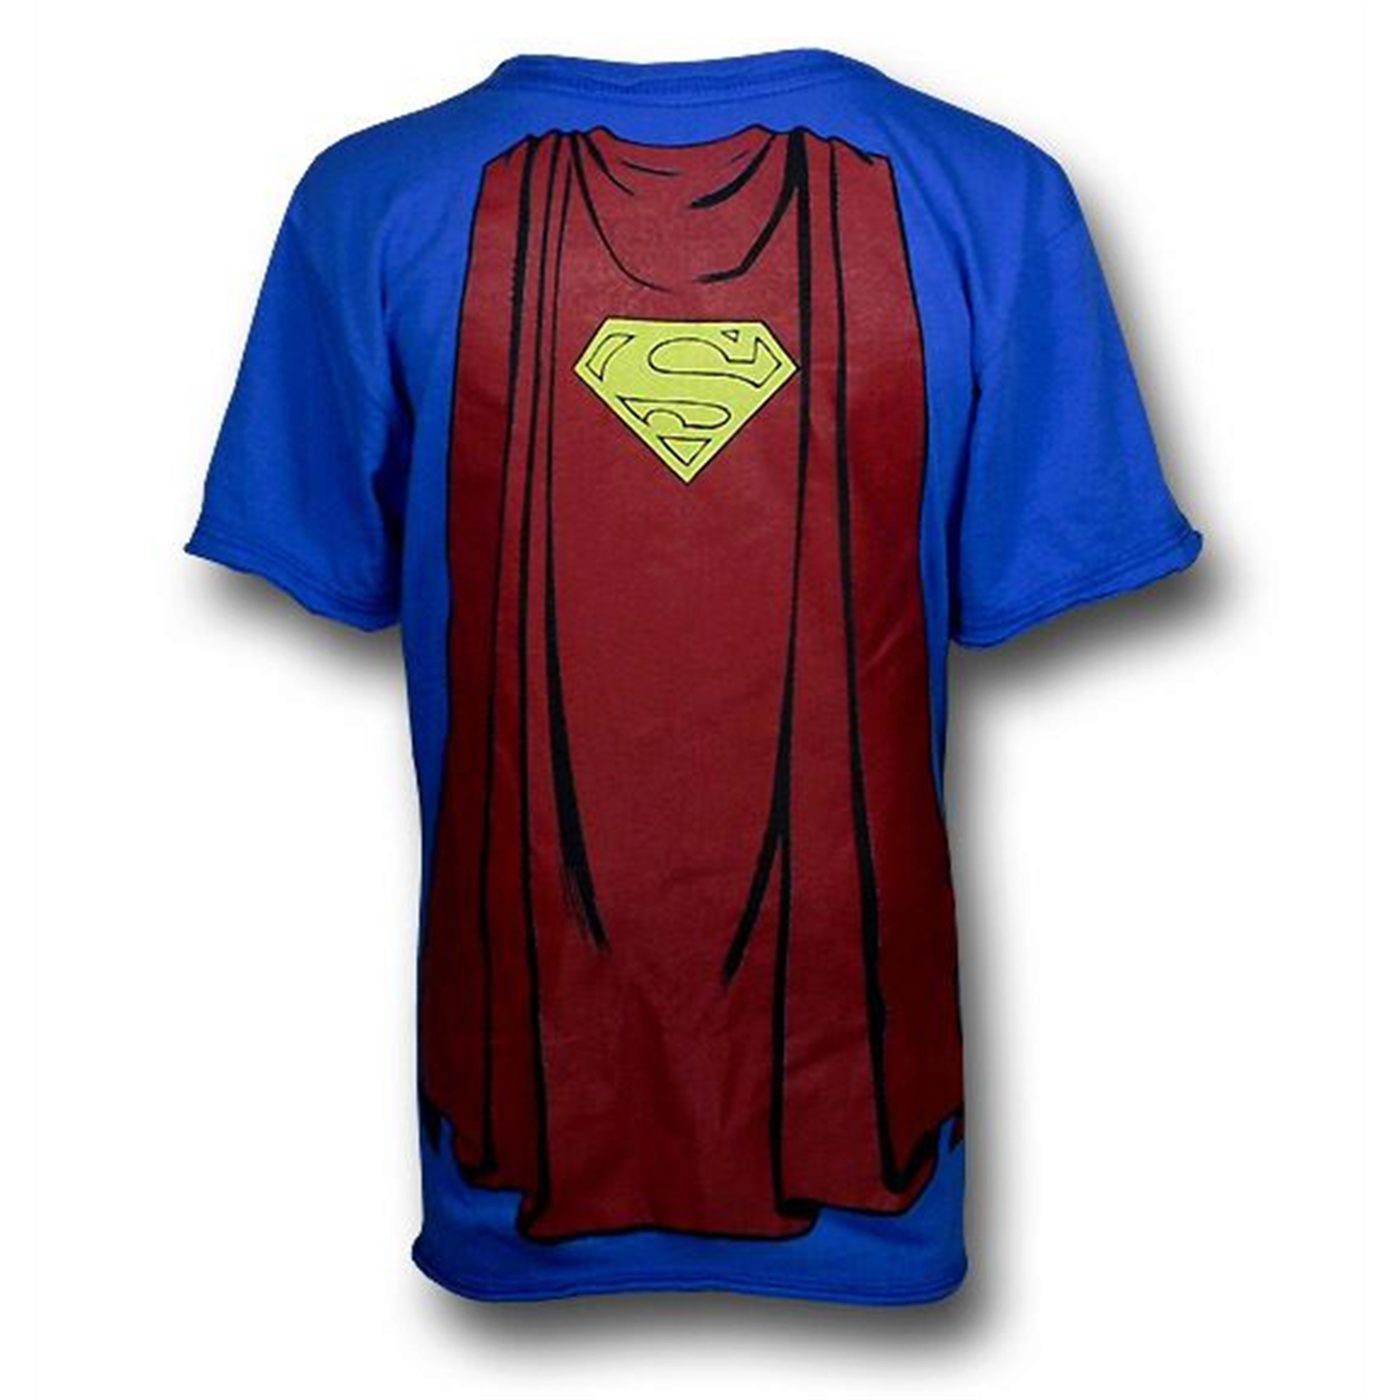 Superman Kids Costume 30 Single T-Shirt